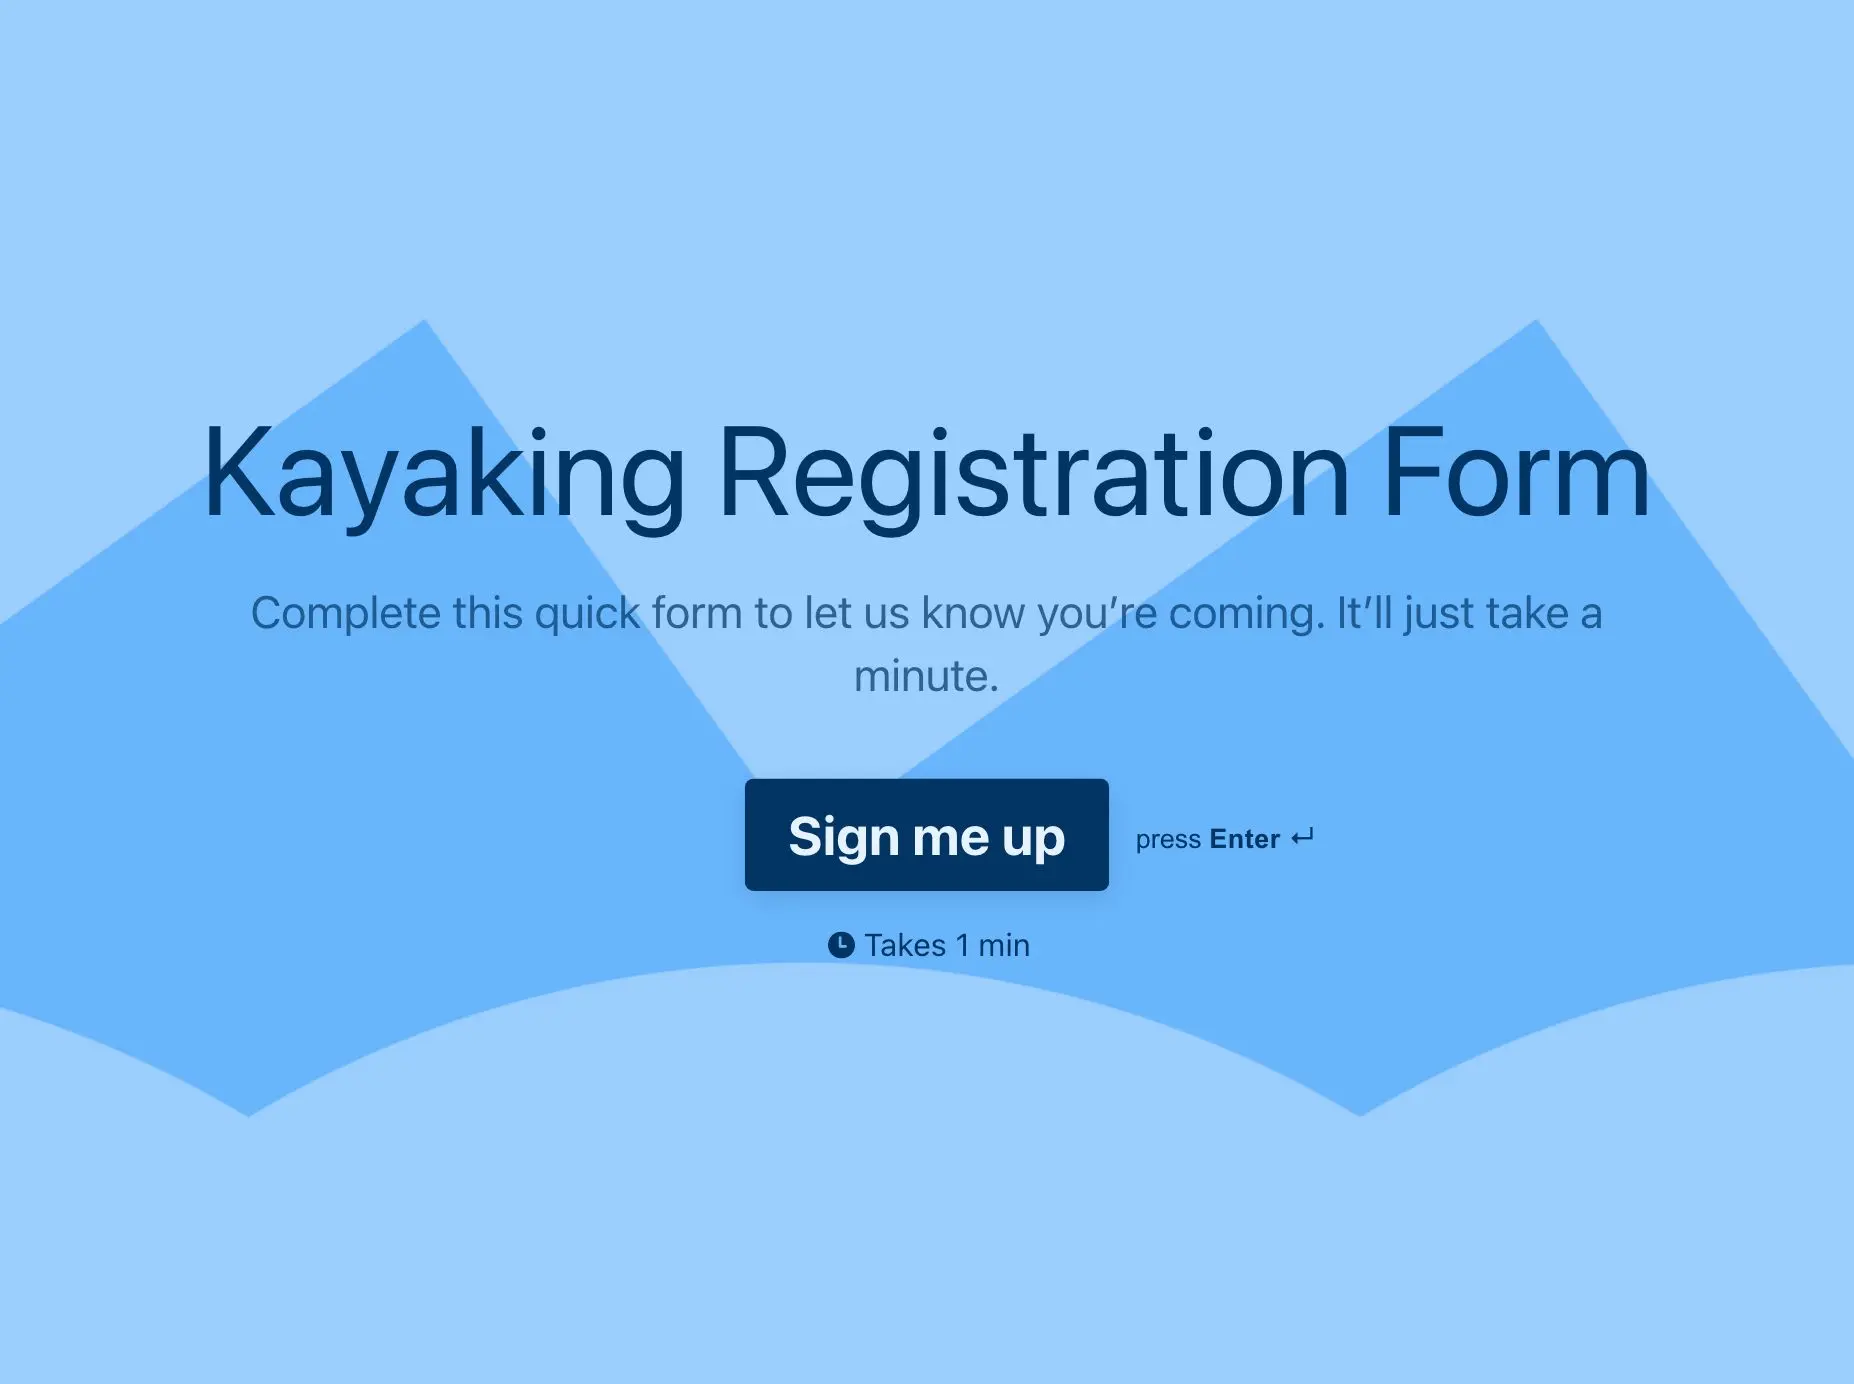 Kayaking Registration Form Template Hero